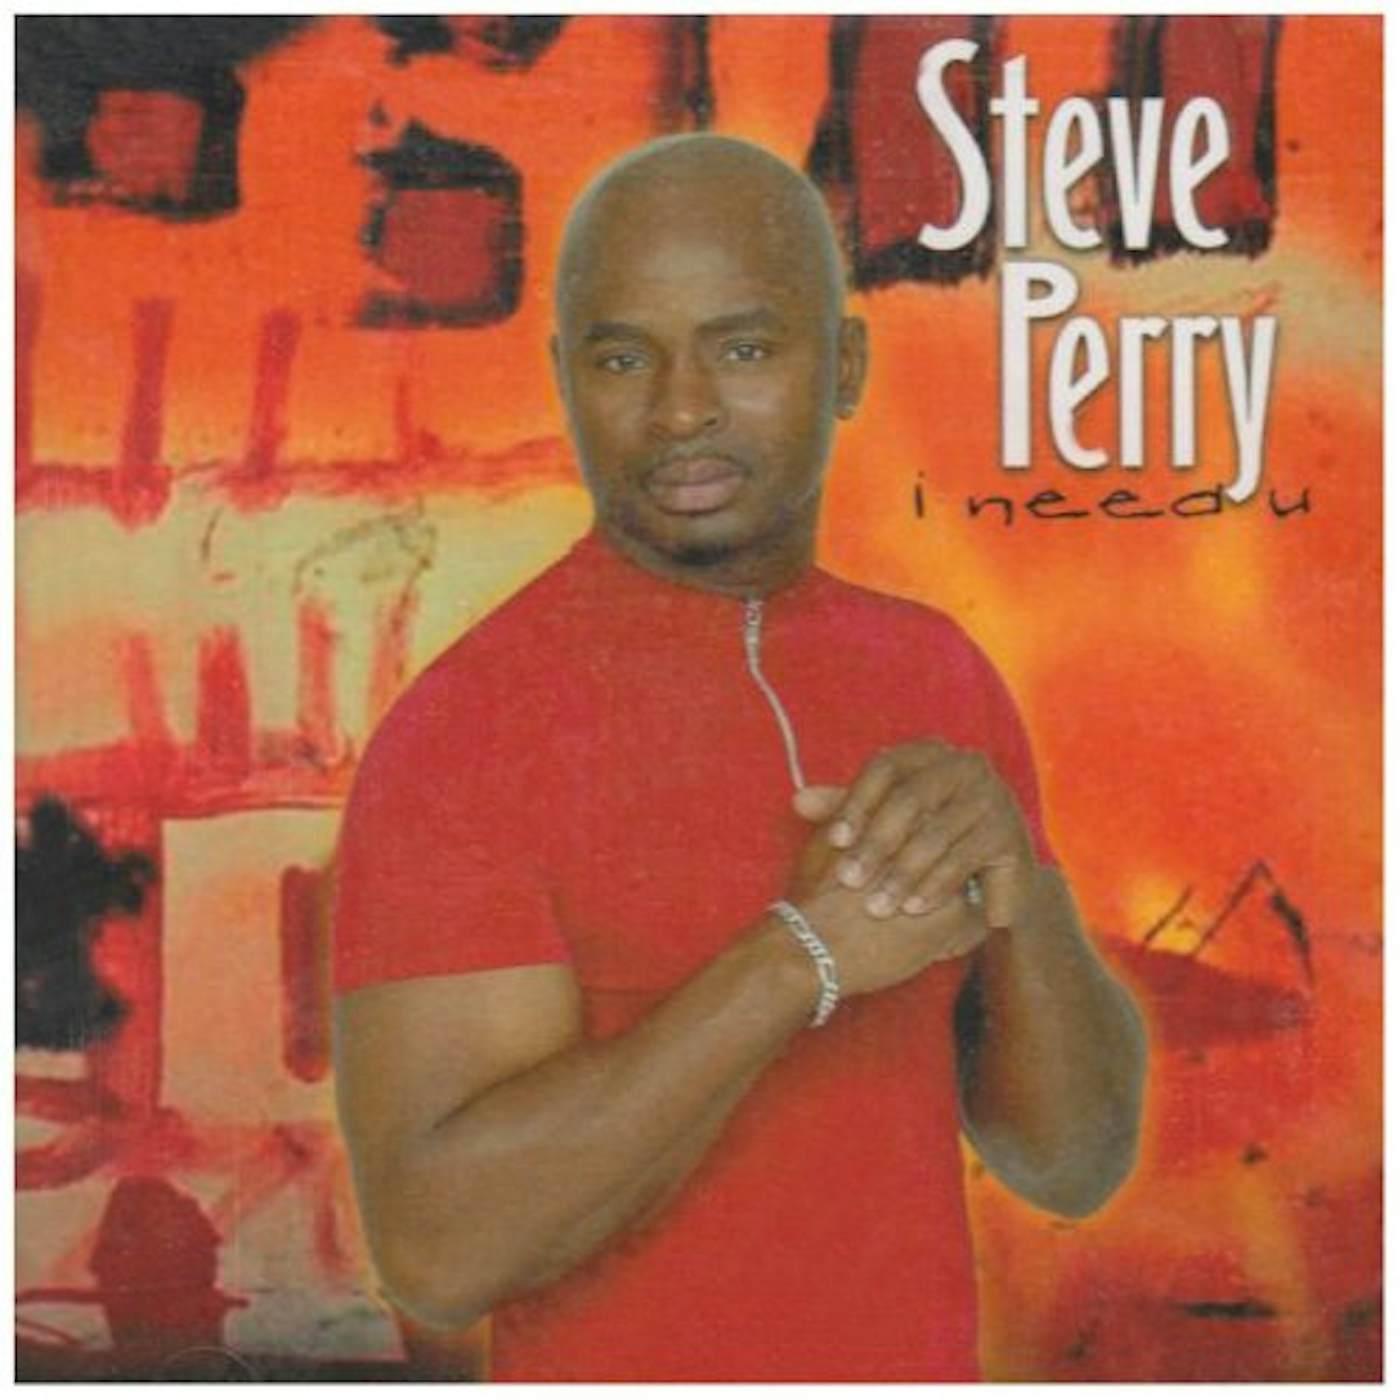 Steve Perry I NEED U CD